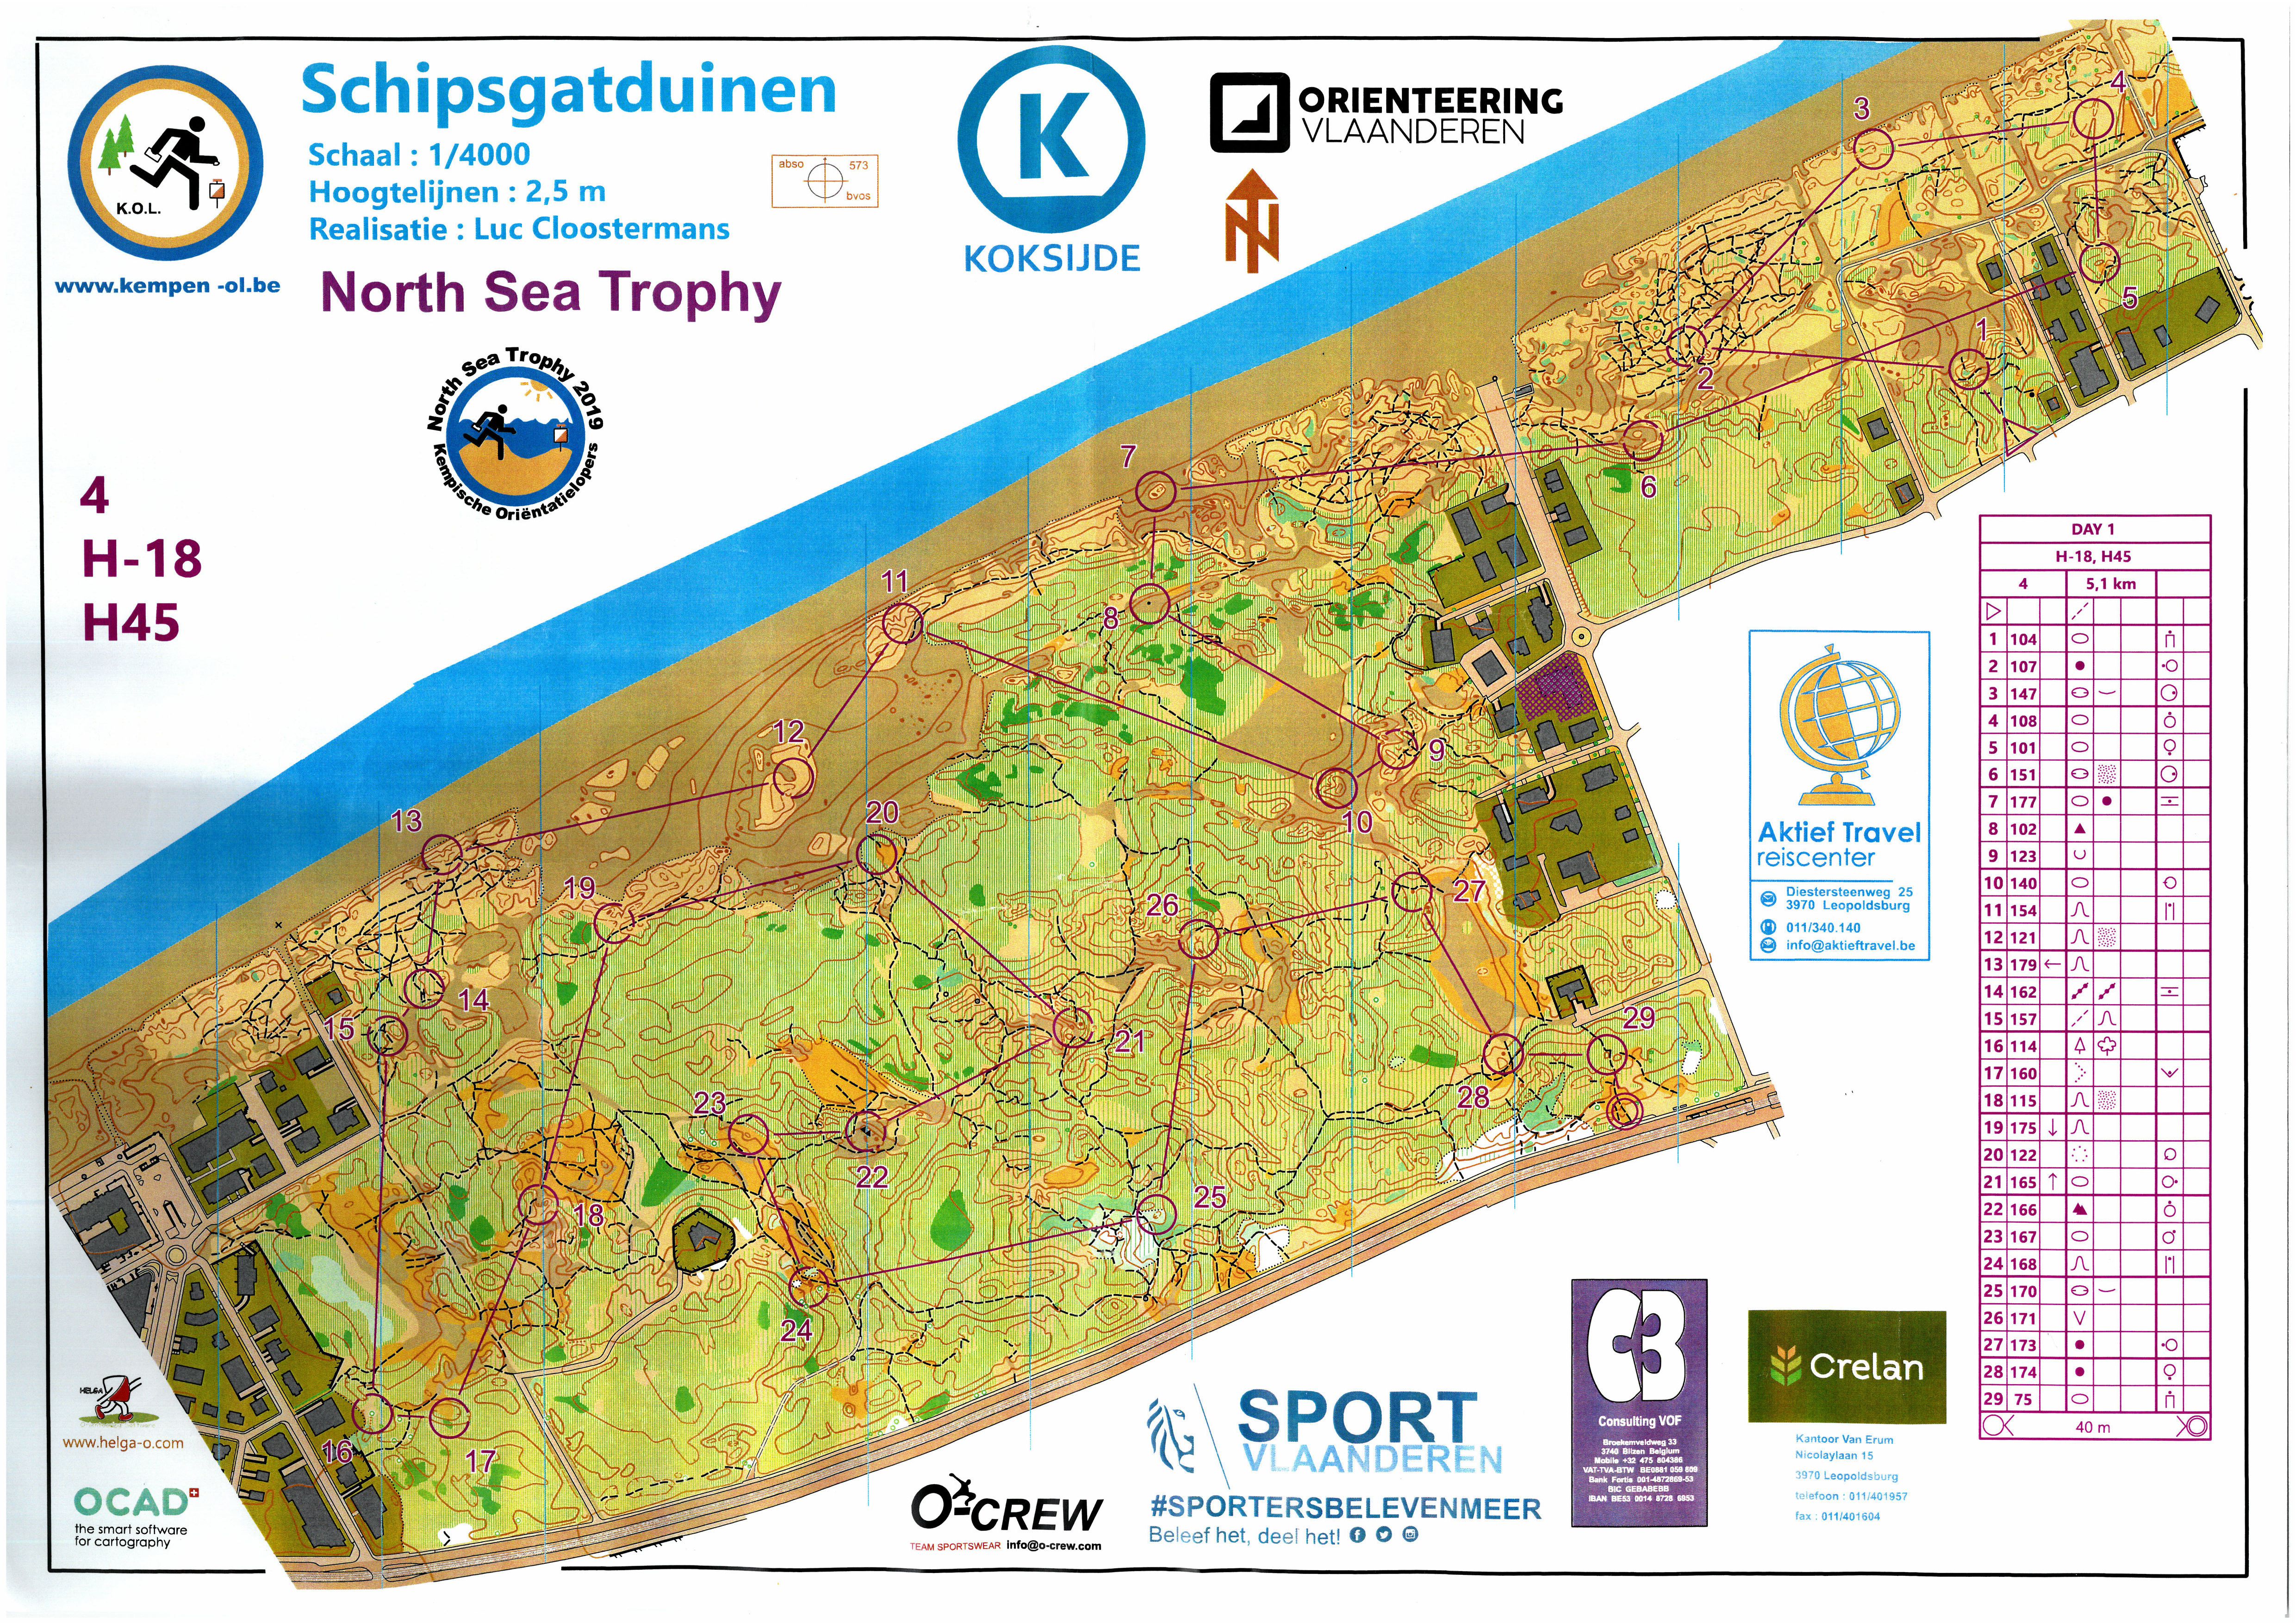 North Sea Trophy - Day1 - H45 (09.11.2019)